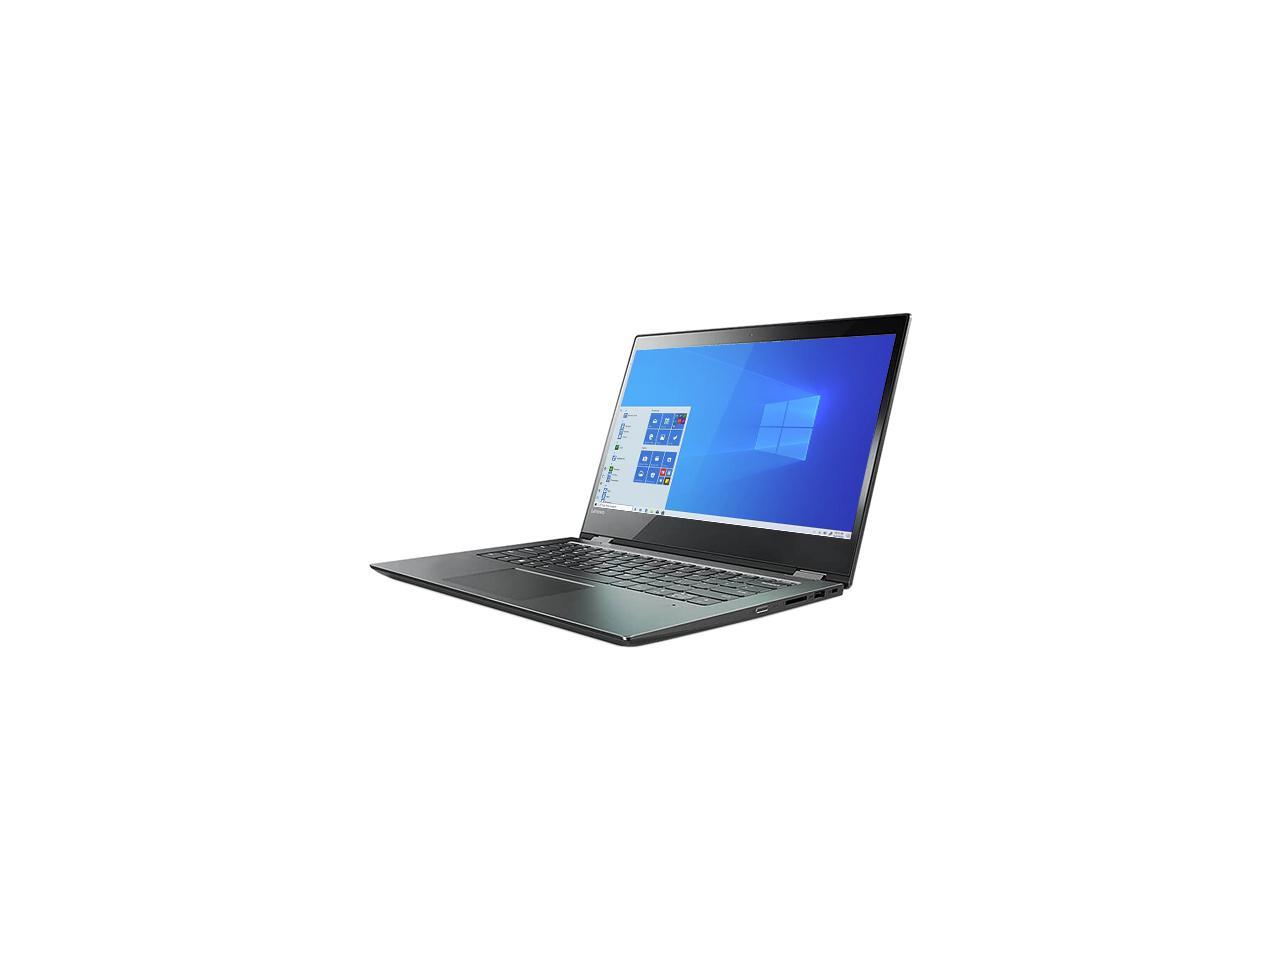 Lenovo IdeaPad Flex 5 14IIL05 81X1000AUS Intel Core i5 10th Gen 1035G1 (1.00 GHz) 8 GB Memory 512 GB PCIe SSD Intel UHD Graphics 14" Touchscreen 1920 x 1080 Convertible 2-in-1 Laptop Windows 10 Home 64-bit